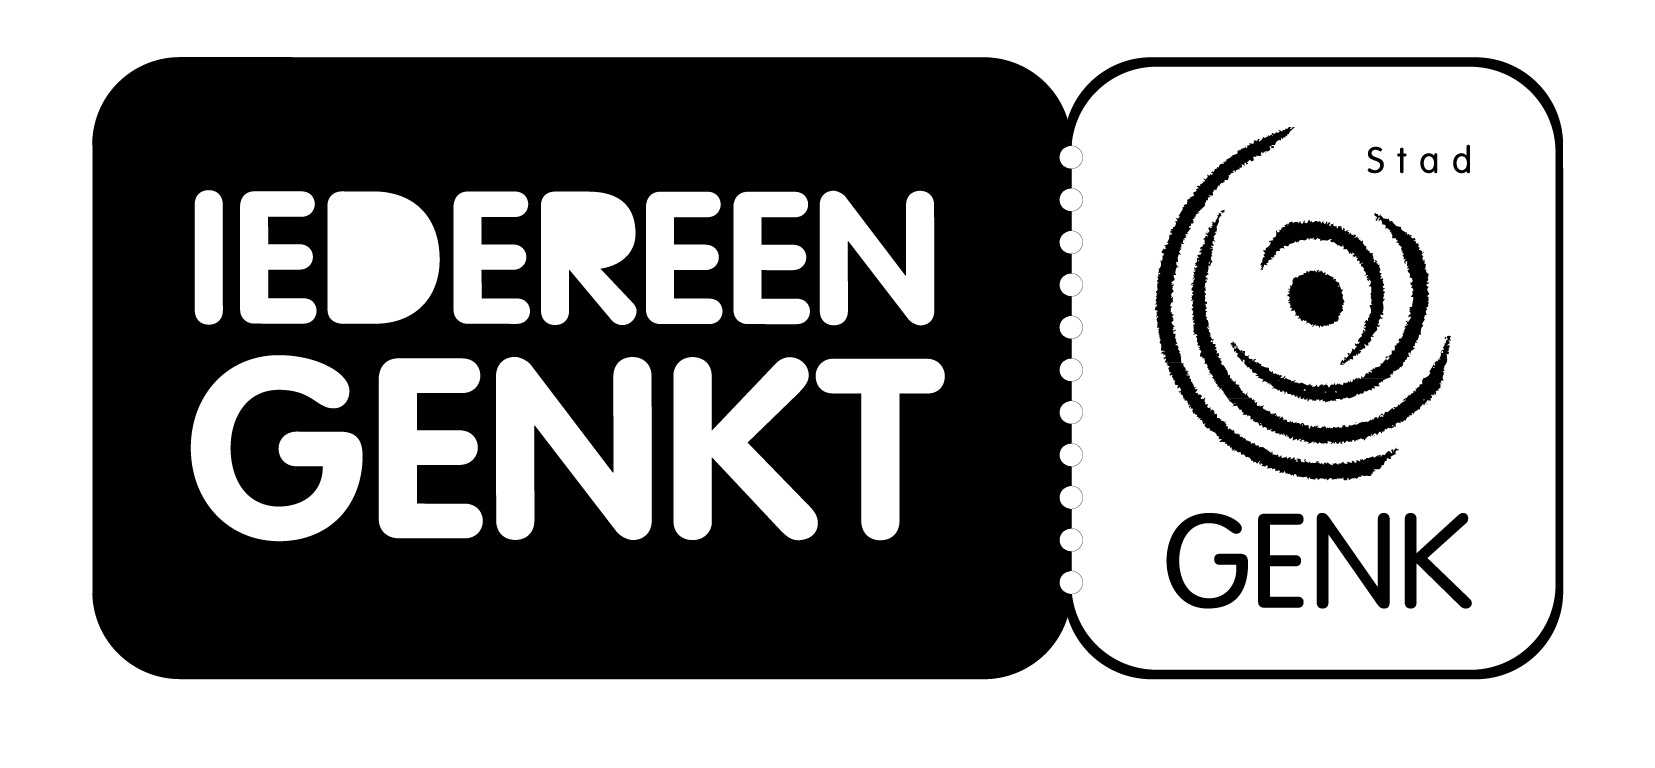 Logo Stad Genk